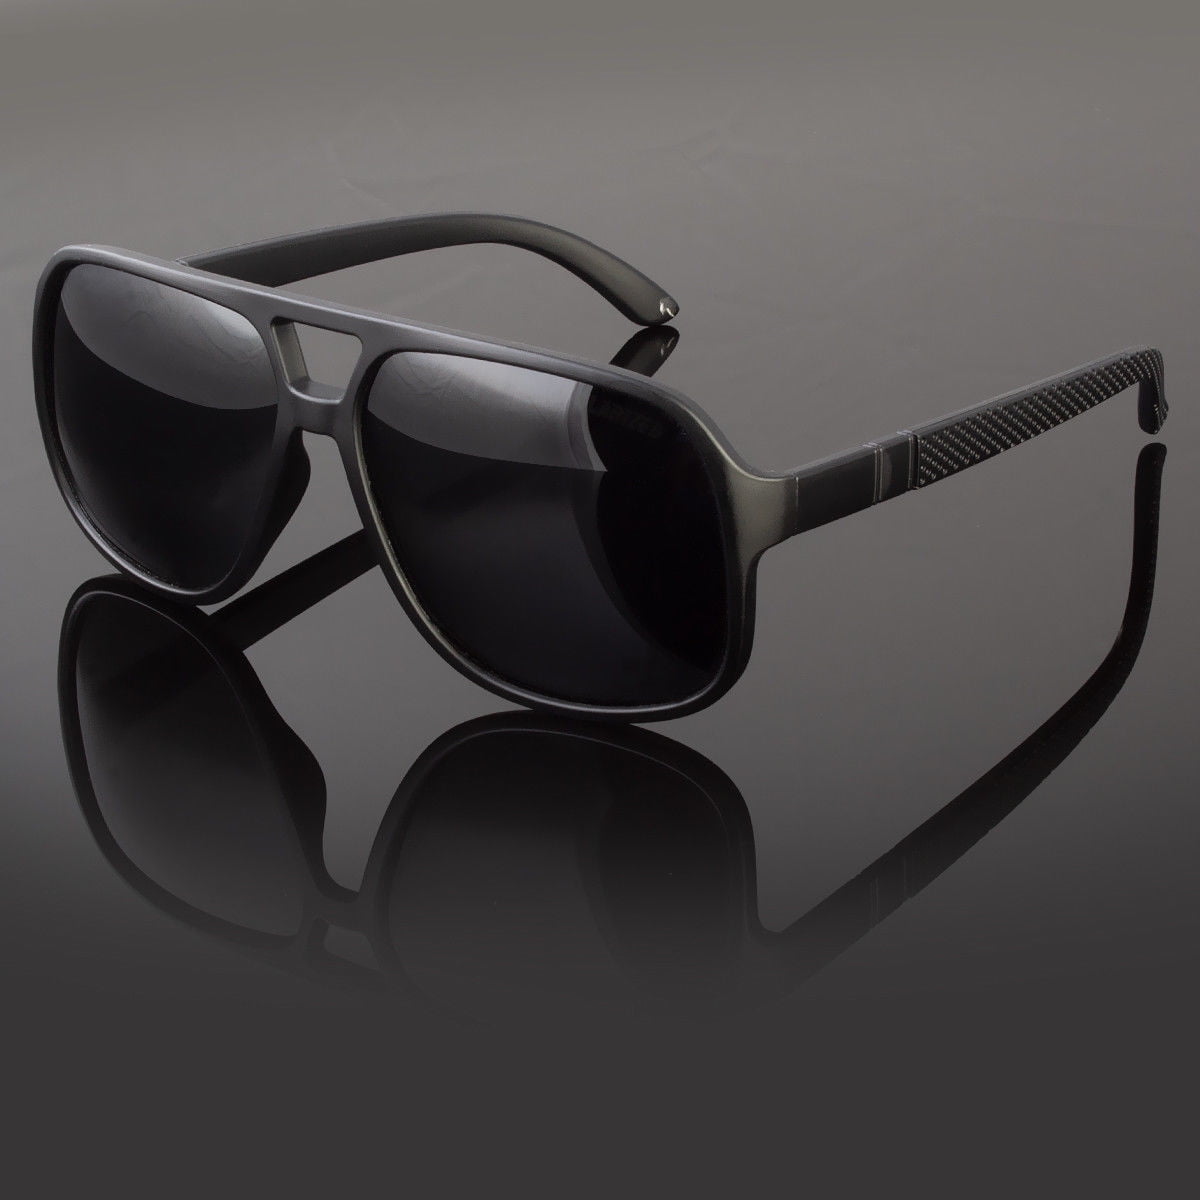 Sunny Shades Black Polarized Aviator Men Glasses Outdoor Sports Eyewear Driving Uv Sunglasses